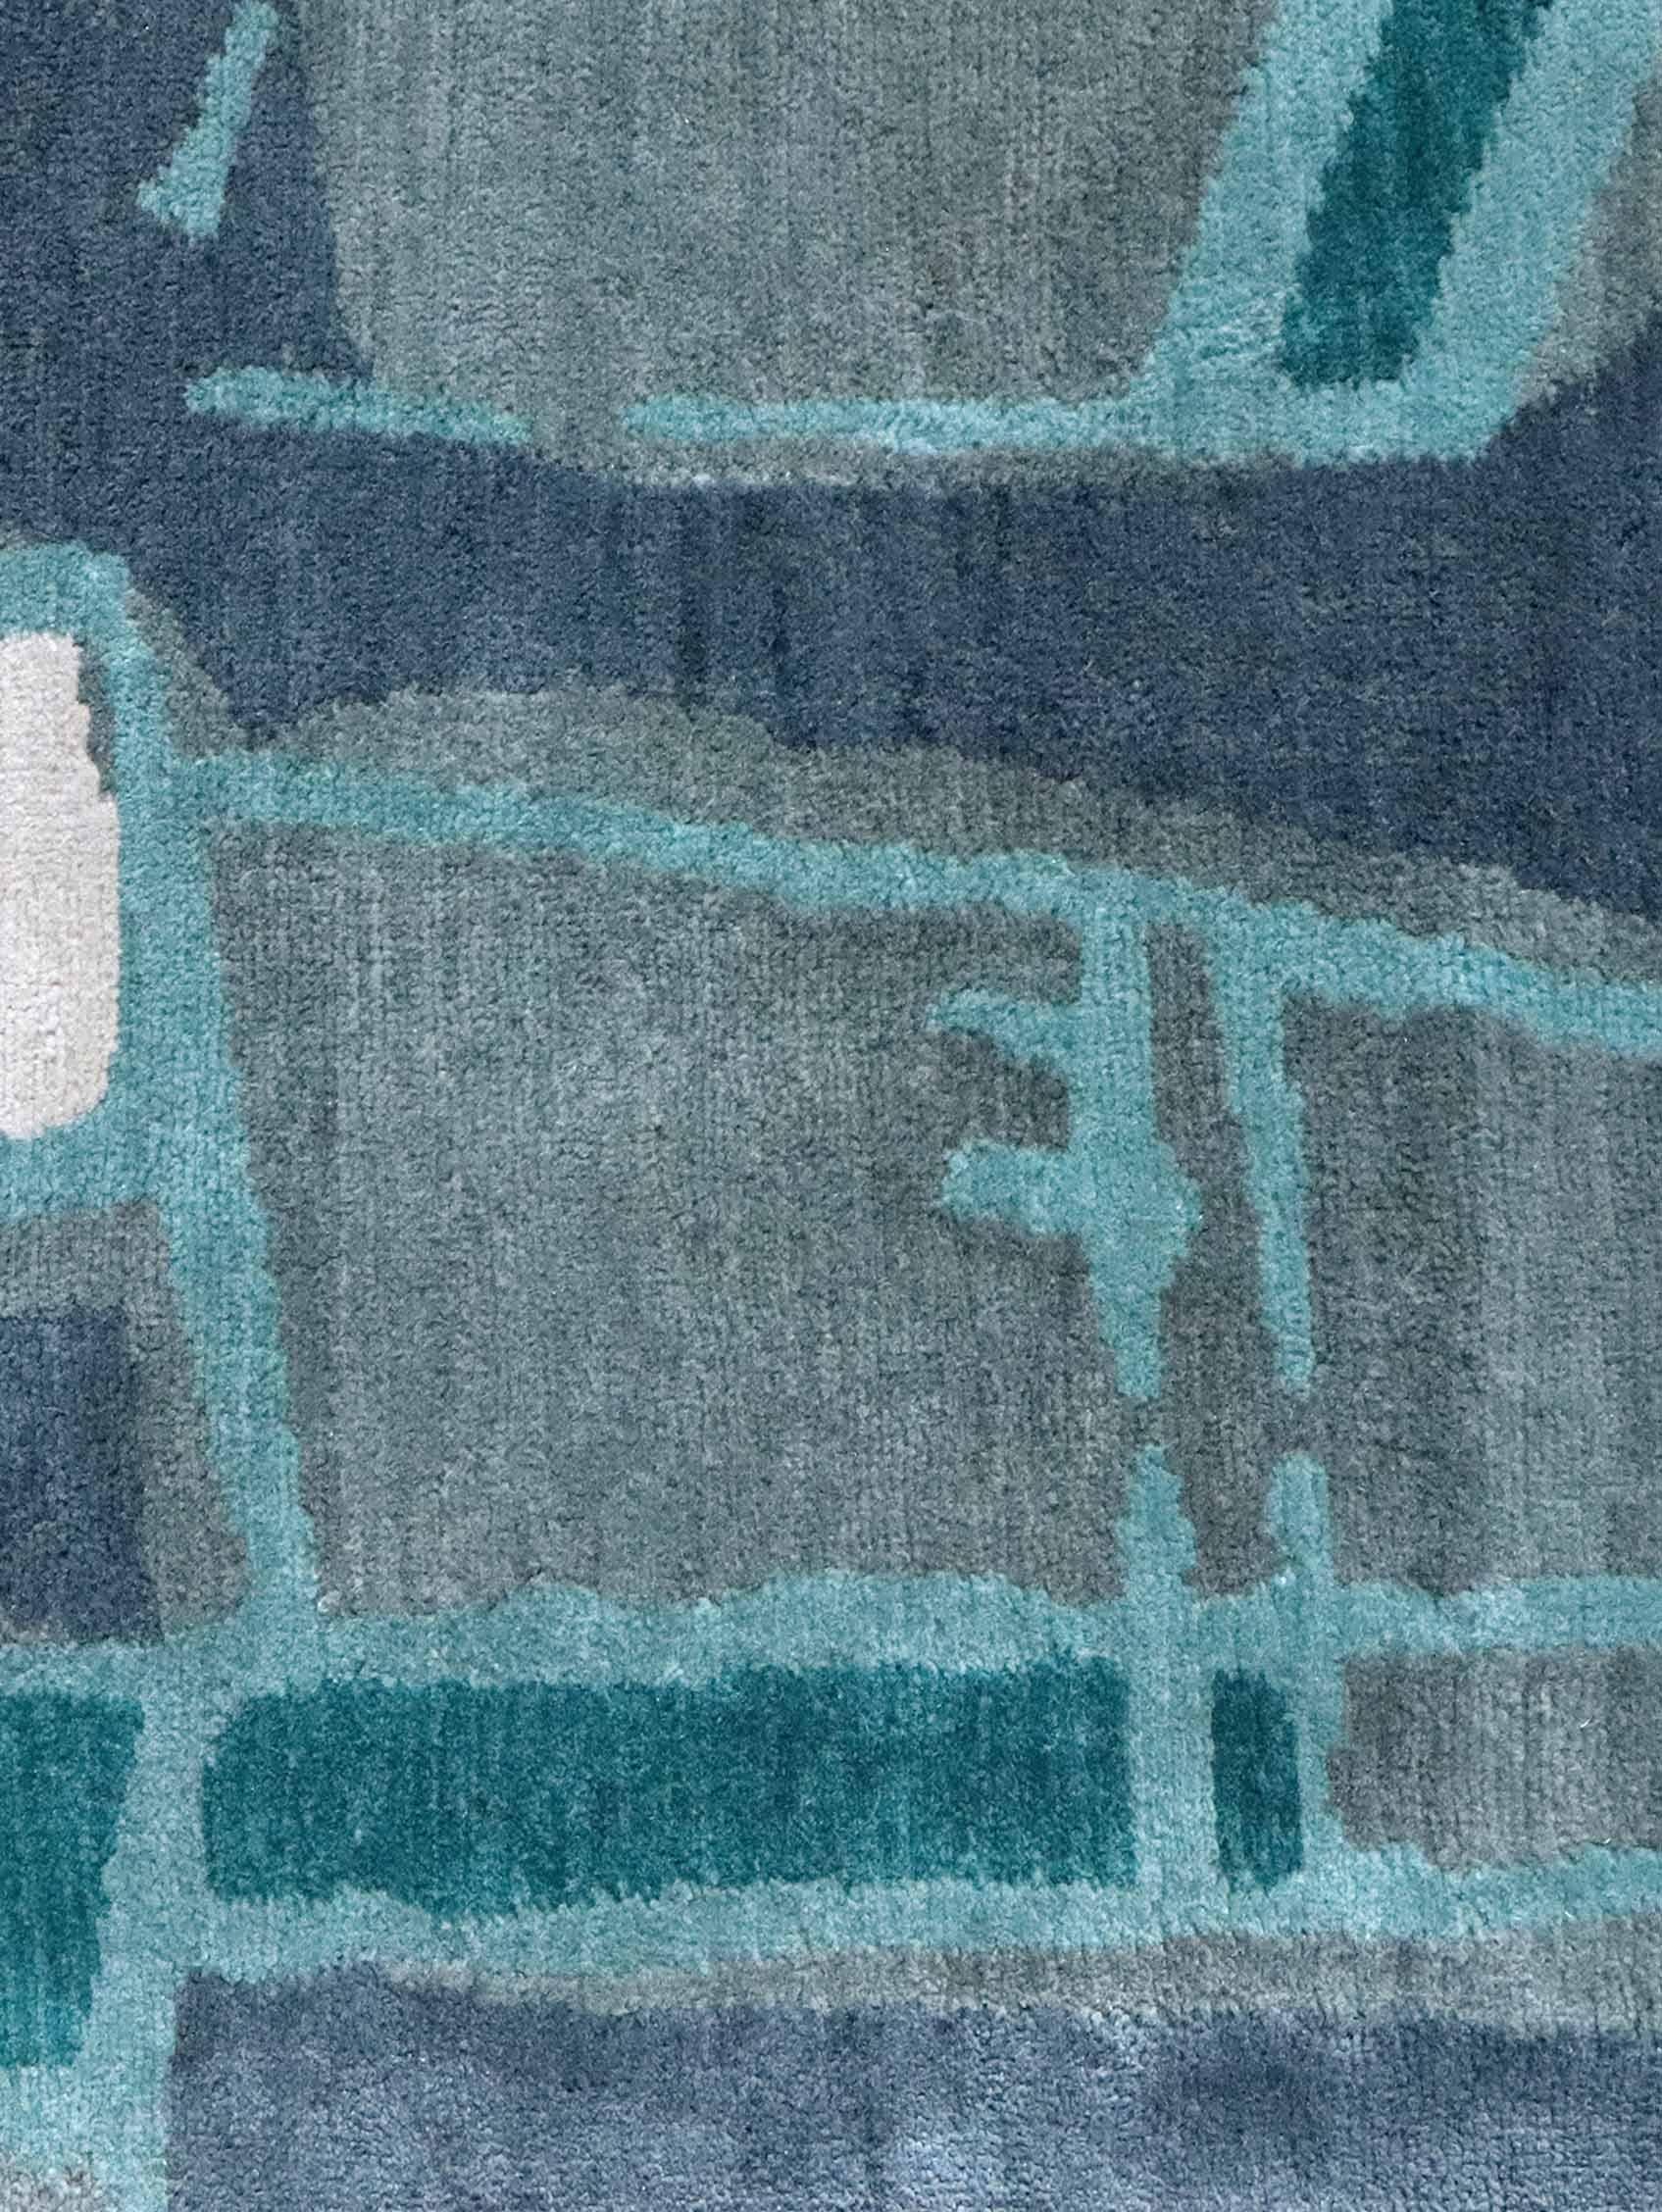 Rug pattern: Quotidiana - Thalassa
Material: 100% Merino Wool 
Quality: Tibetan Cross Weave, handwoven 
Size: 8’-0